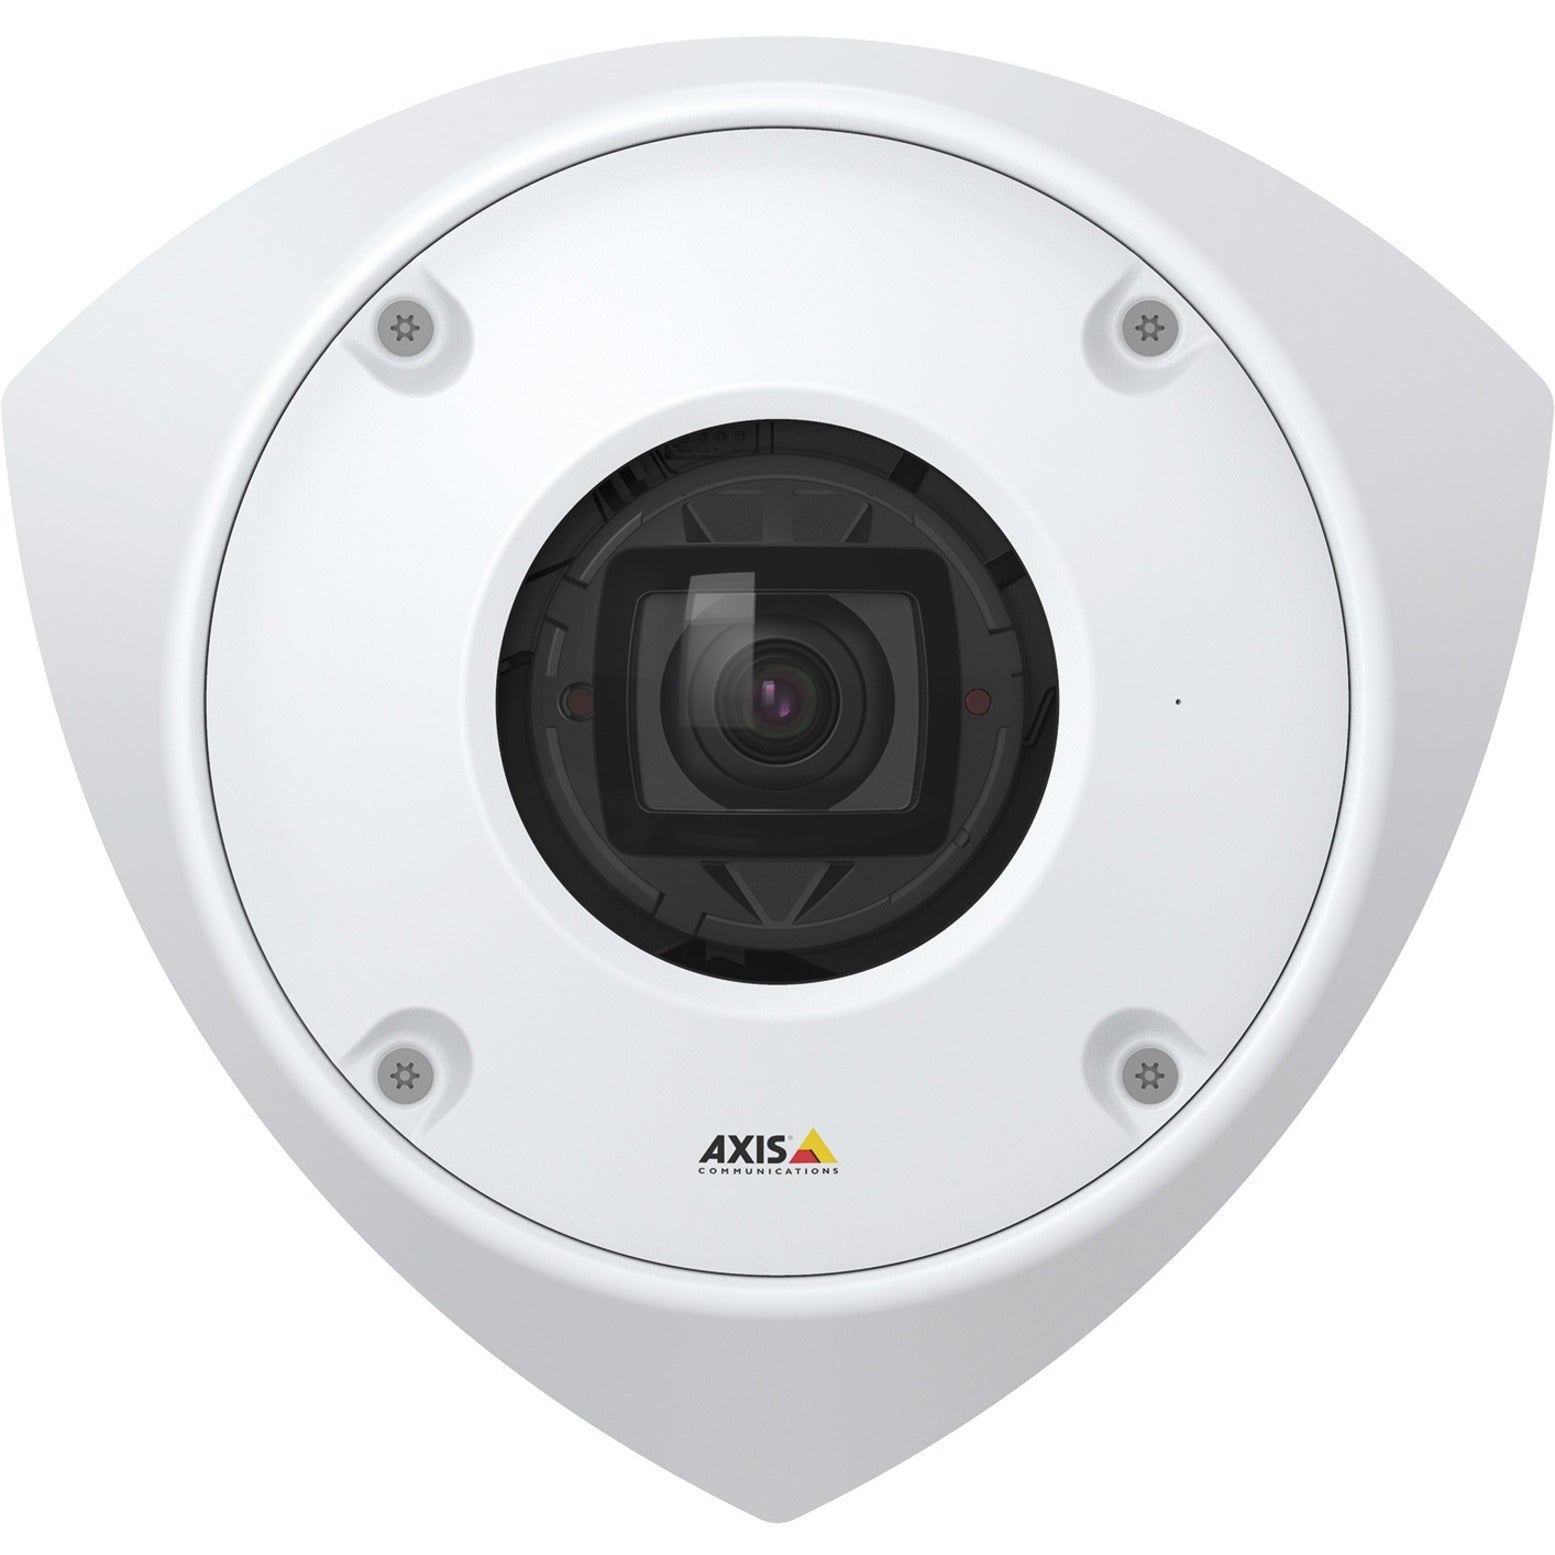 AXIS 01766-001 Q9216-SLV Network Camera, 4 Megapixel, Outdoor, Color, Monochrome, TAA Compliant